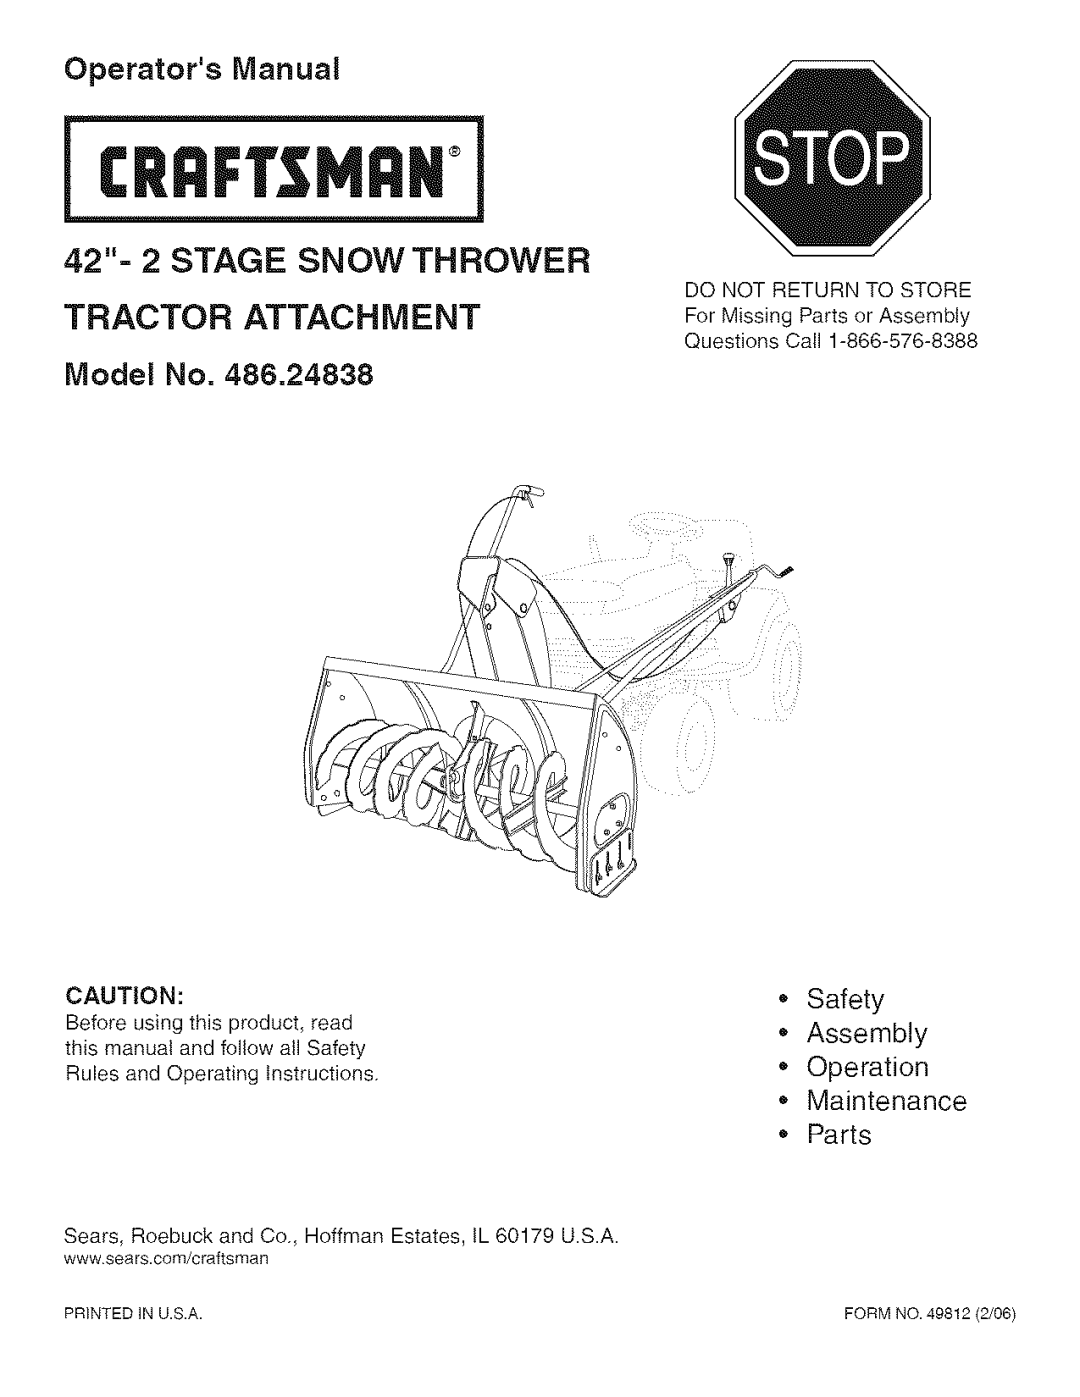 Craftsman 486.24838 manual Model No, Safety Assembly Operation Maintenance Parts, Crqftsnqn, Operators Manual 